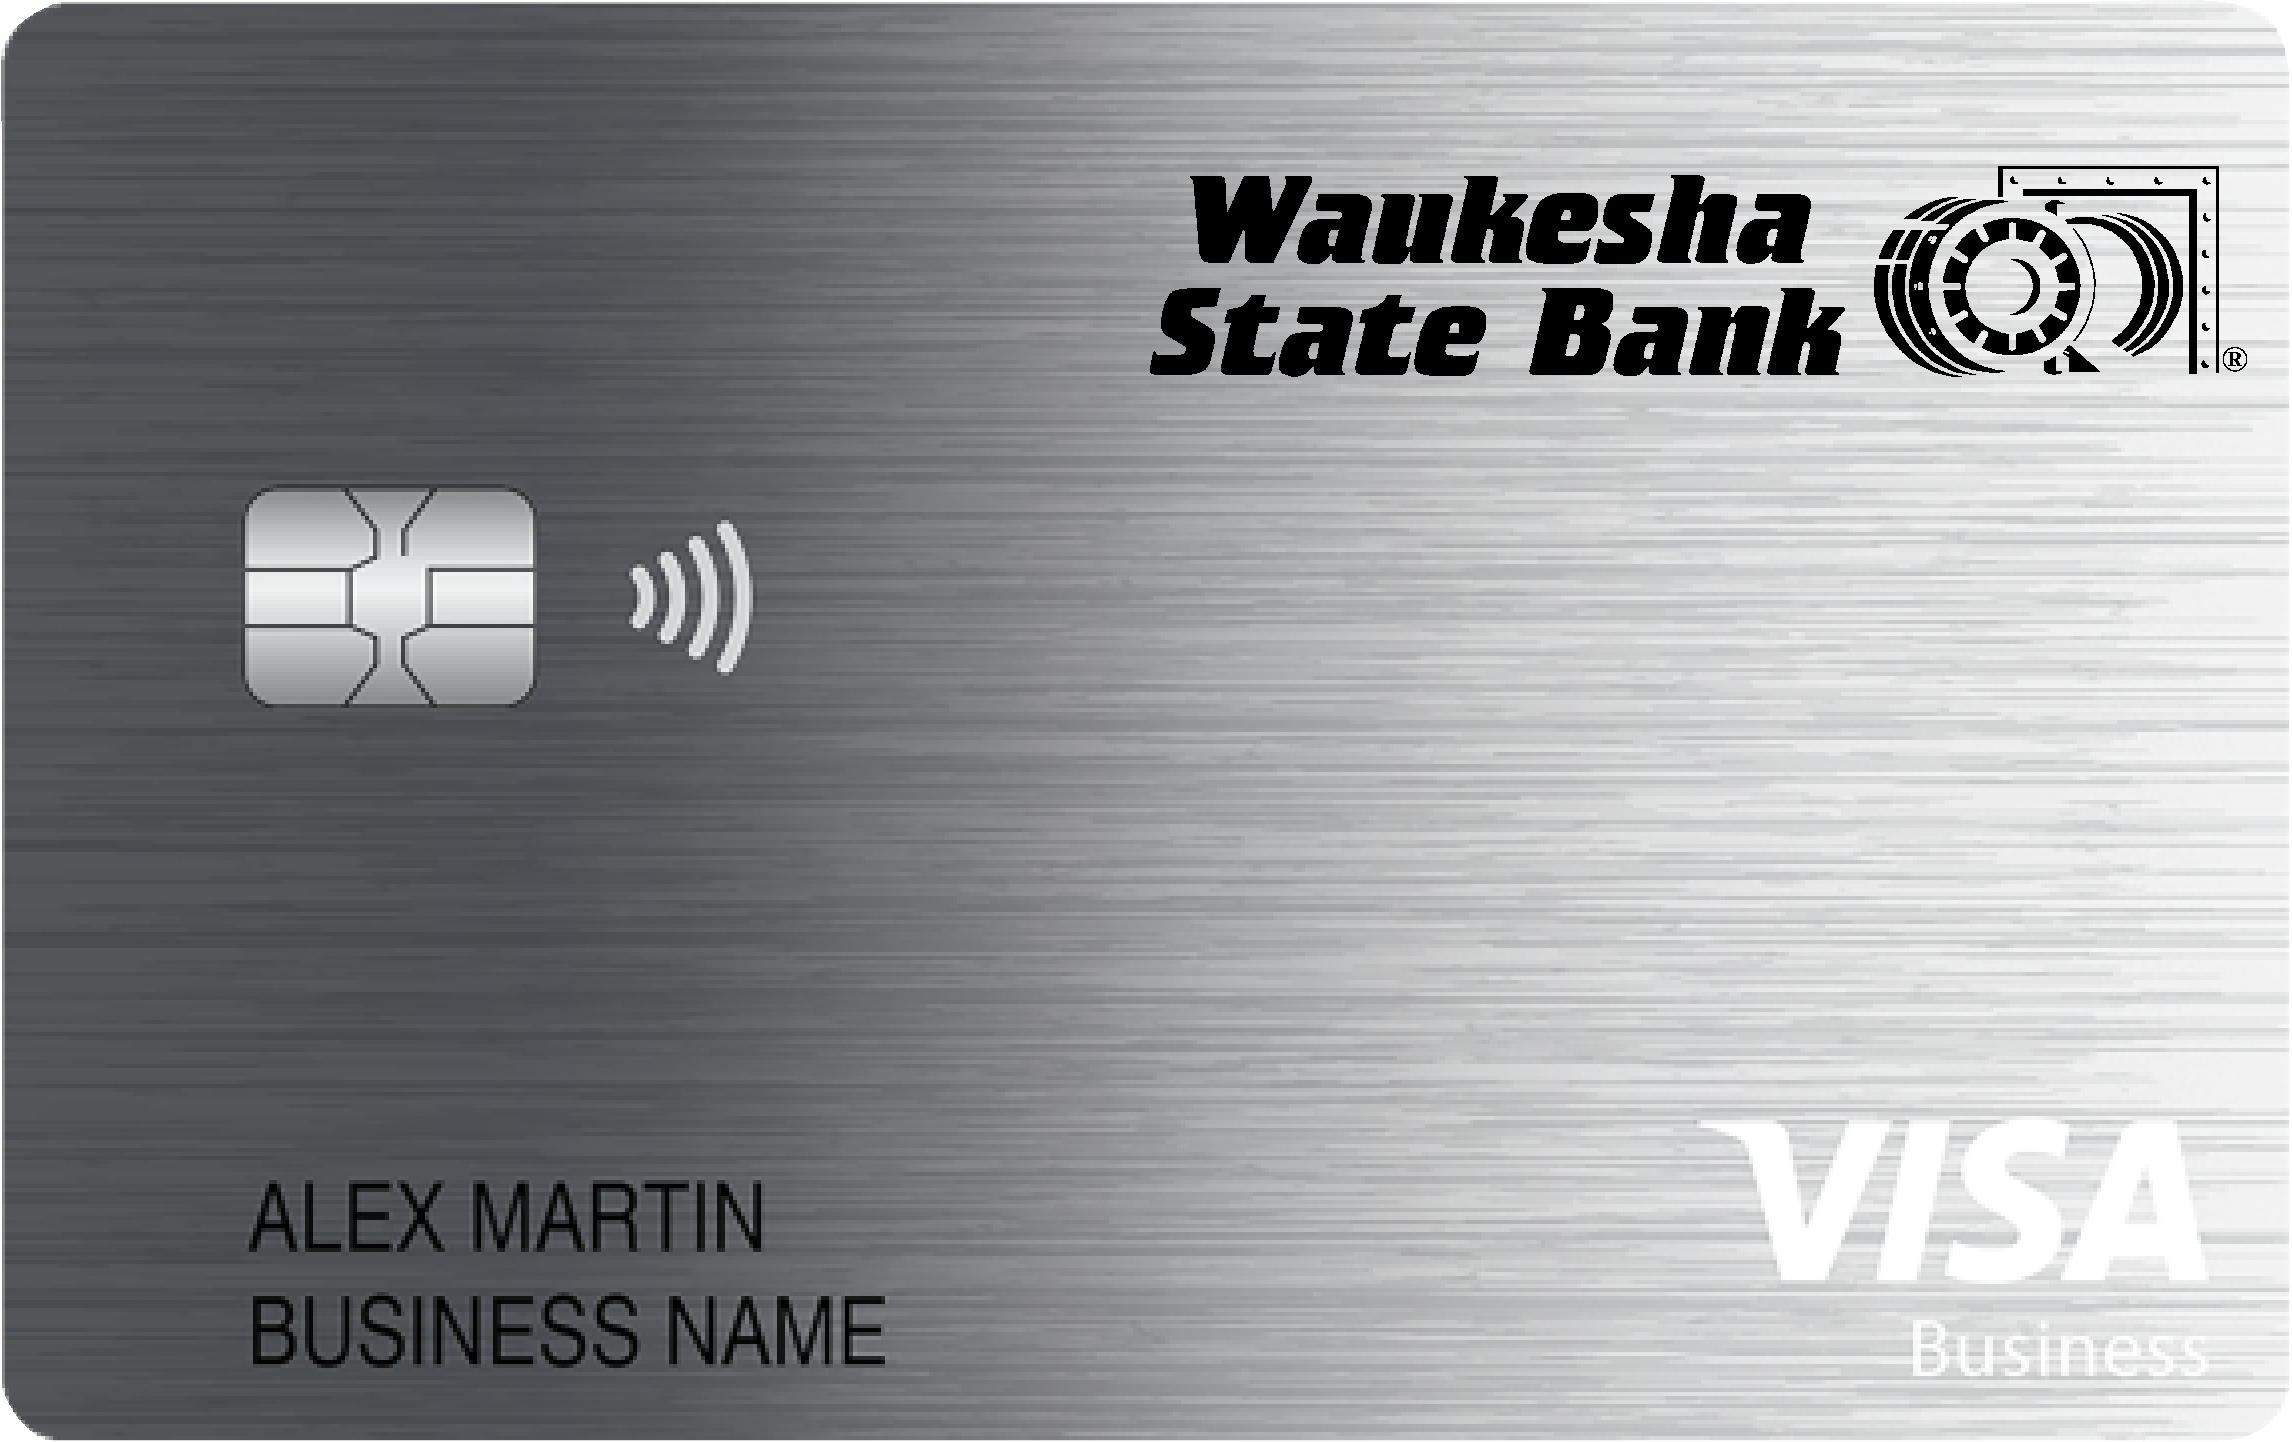 Waukesha State Bank Business Cash Preferred Card